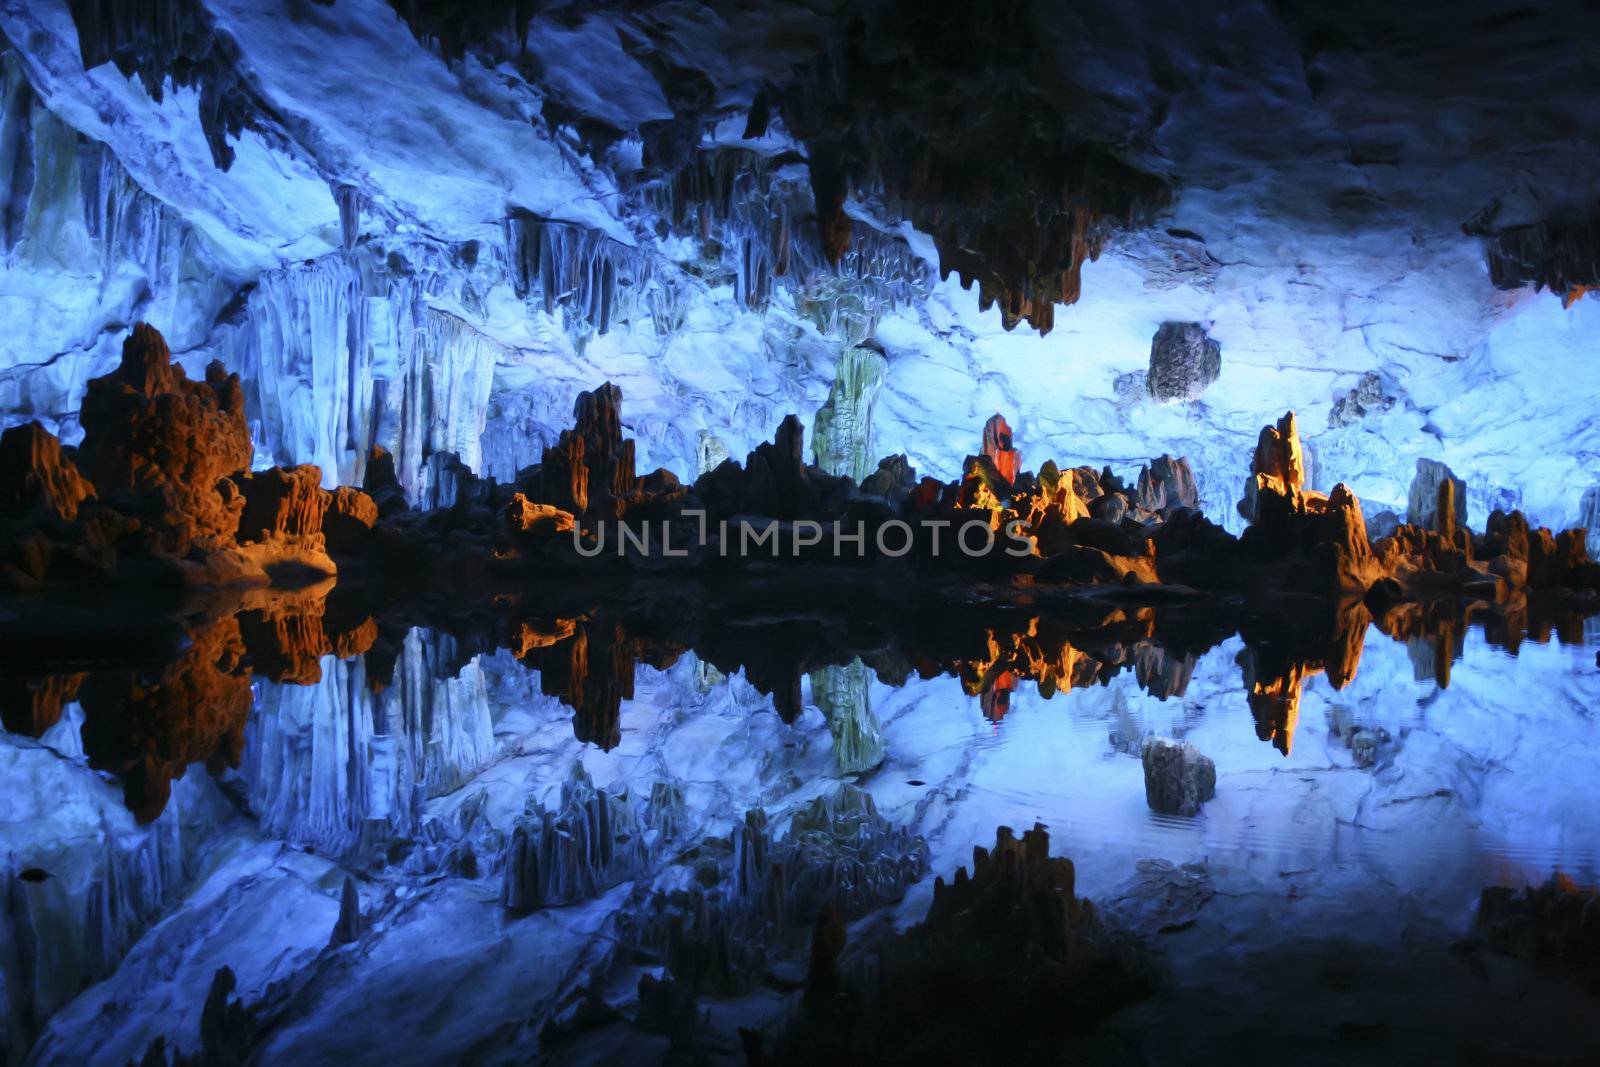 Underground lake in the Reed Flute Cave (Lu Di Yan) near Guilin in China